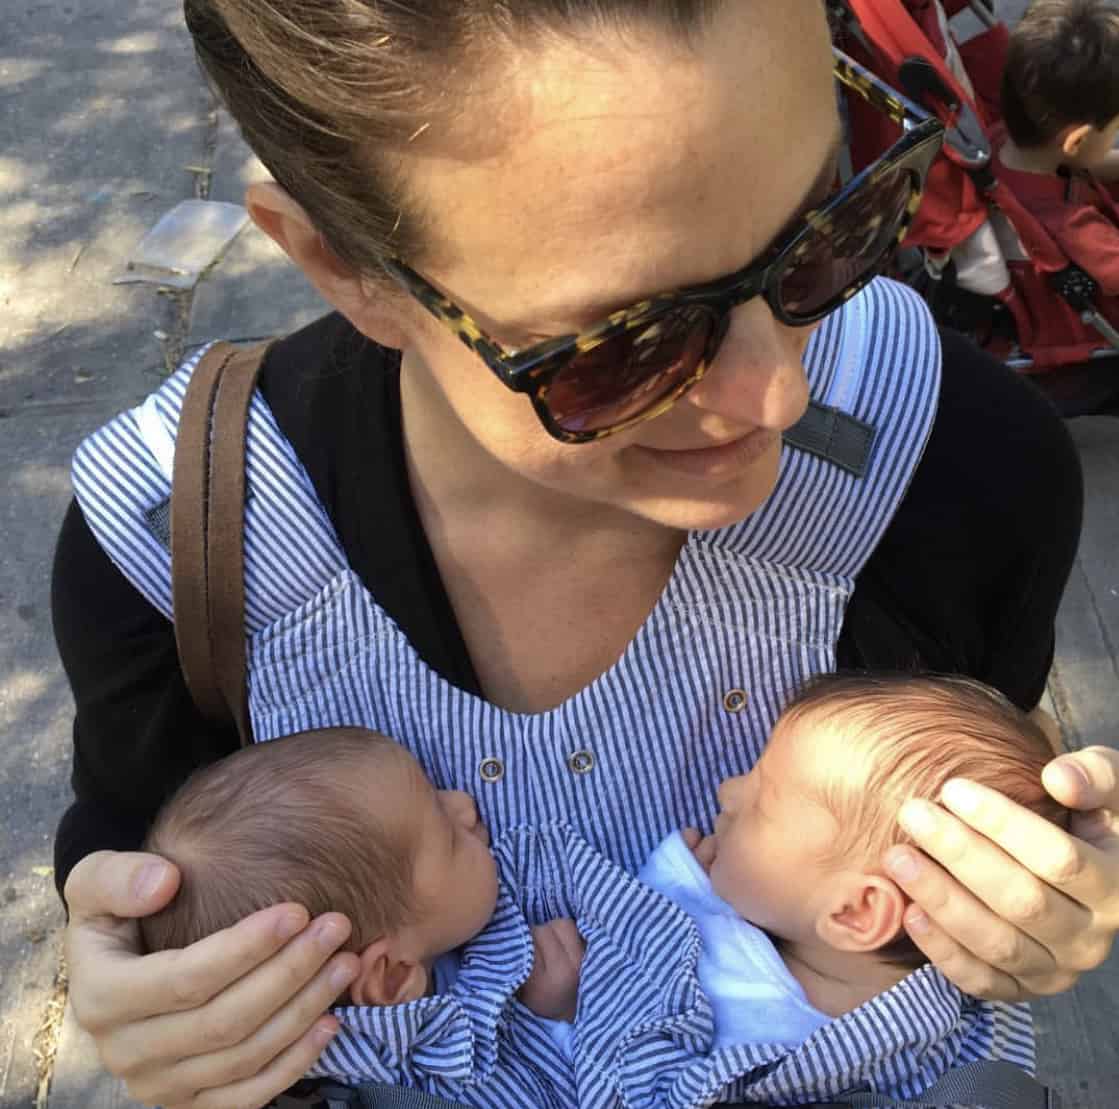 Jenny best carries twin newborns in the WeGo baby carrier